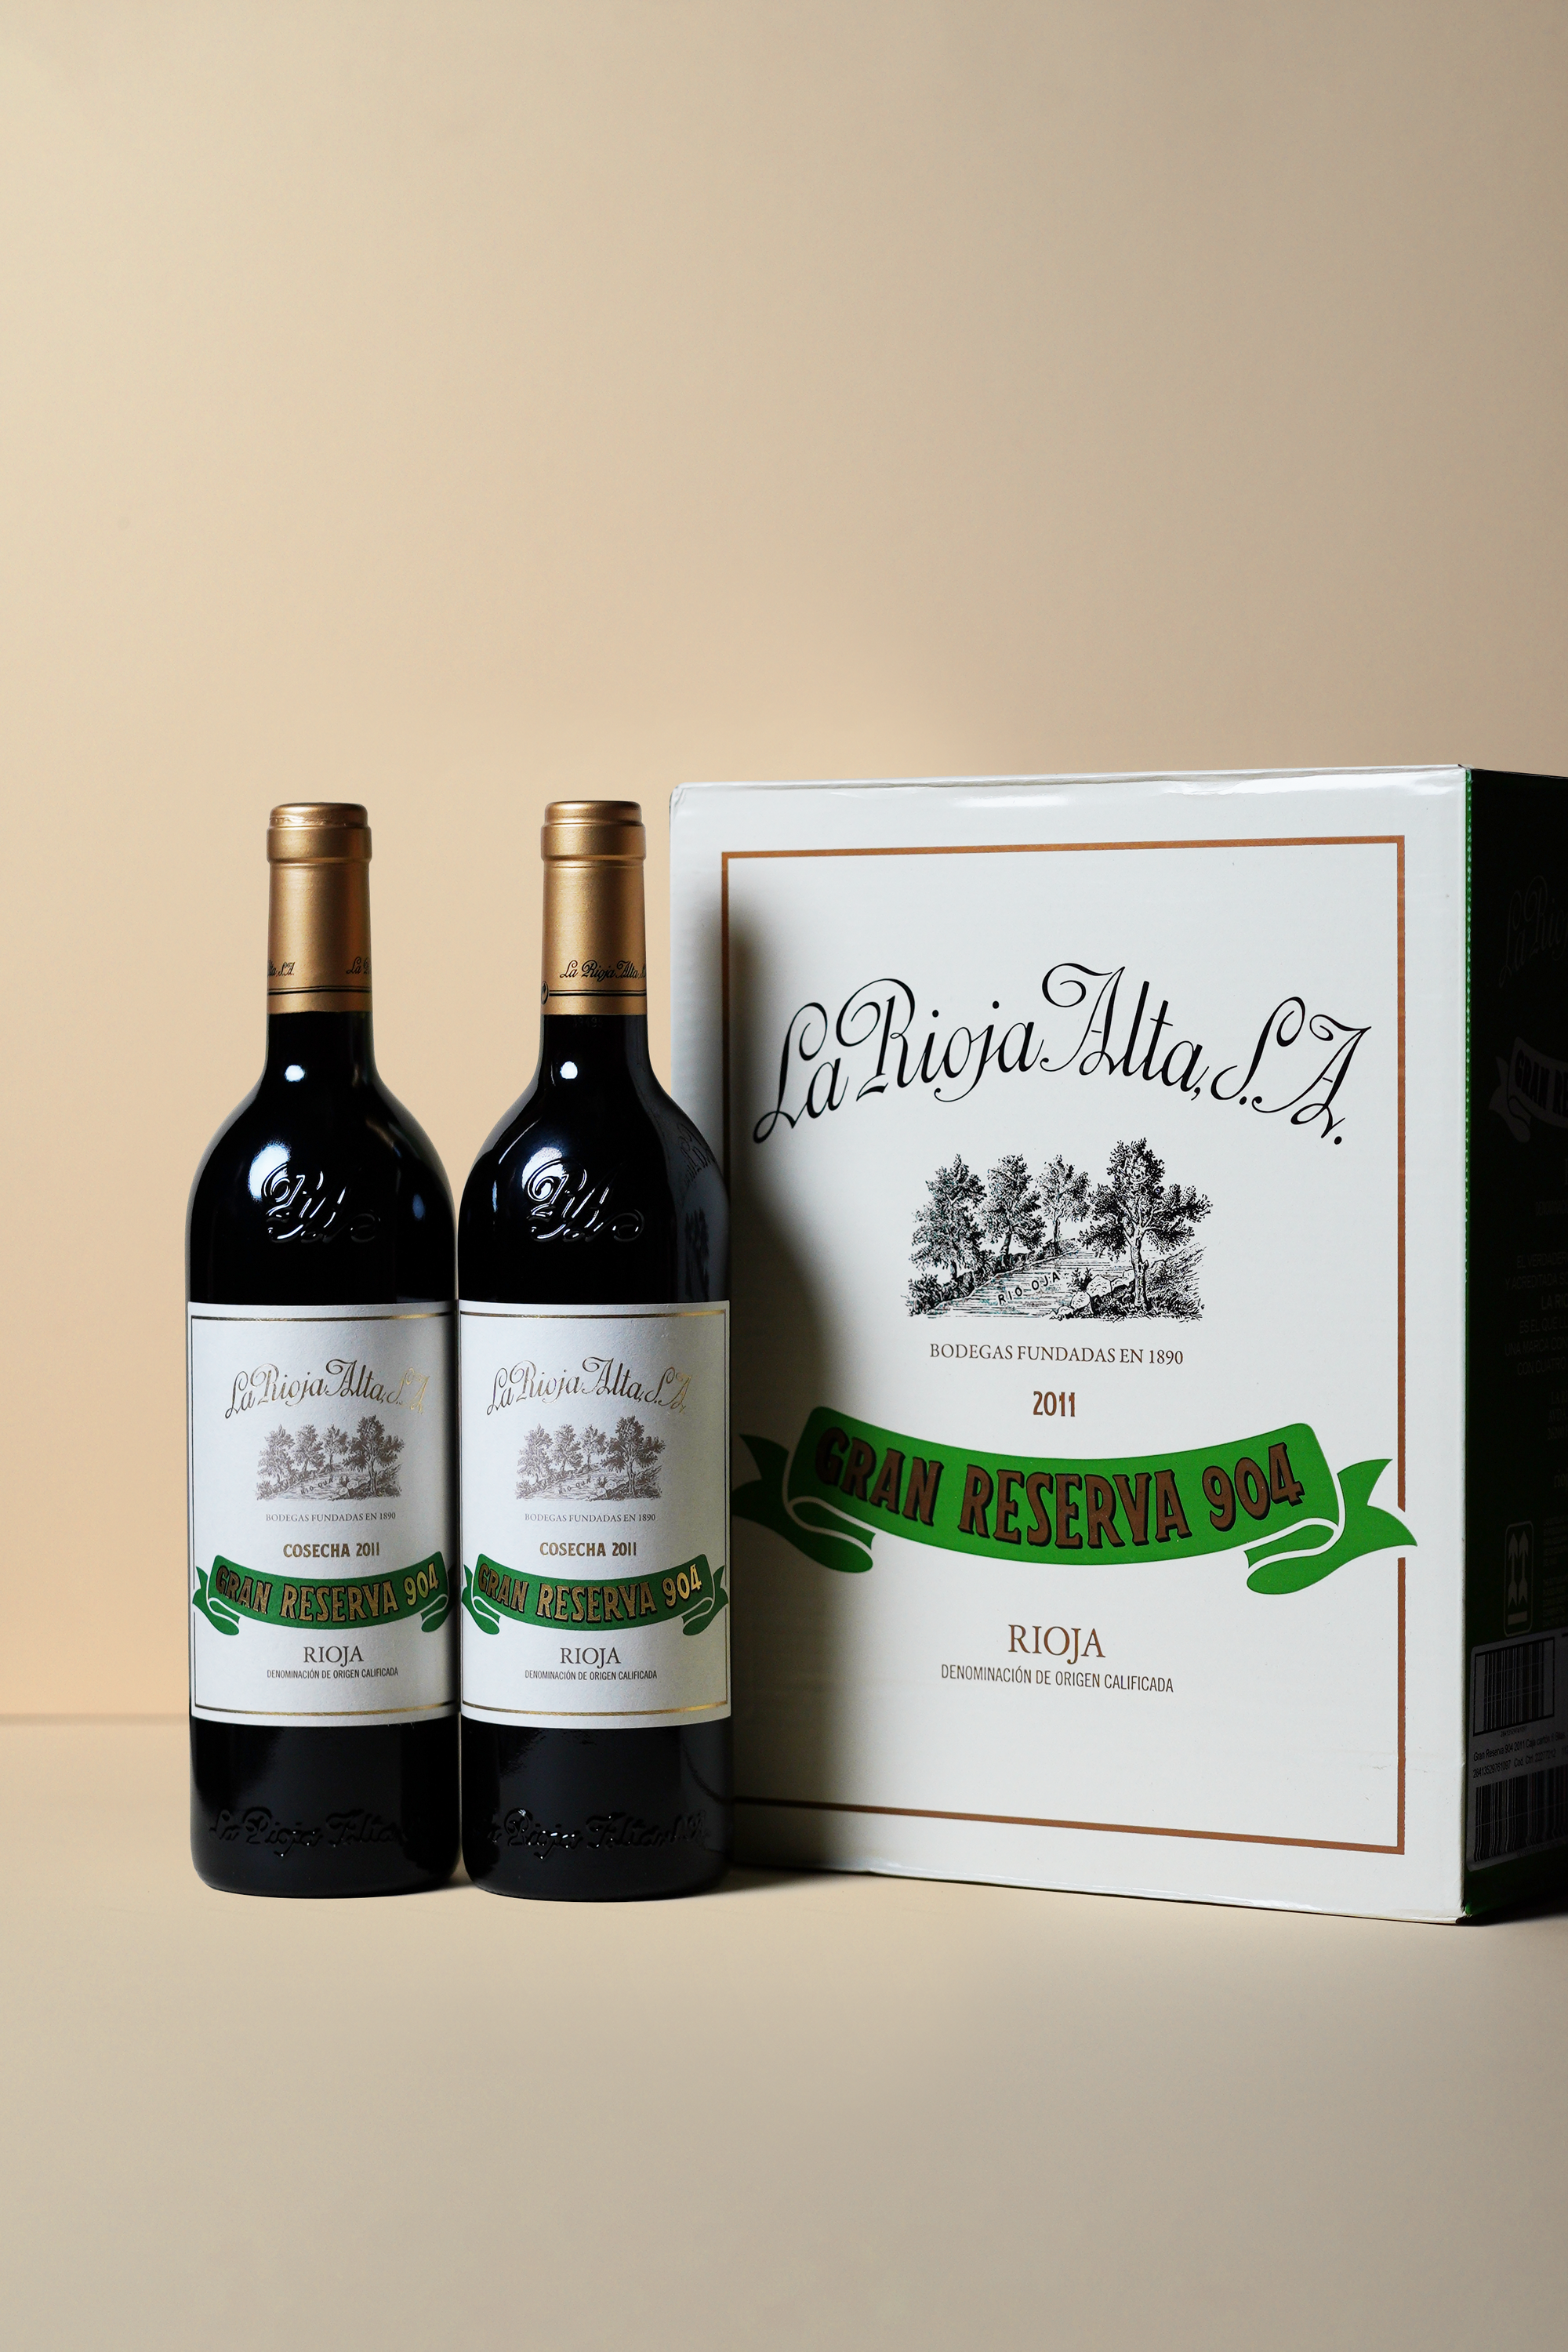 La Rioja Alta, Gran Reserva 904 2011 (OCC of 6 bottles)